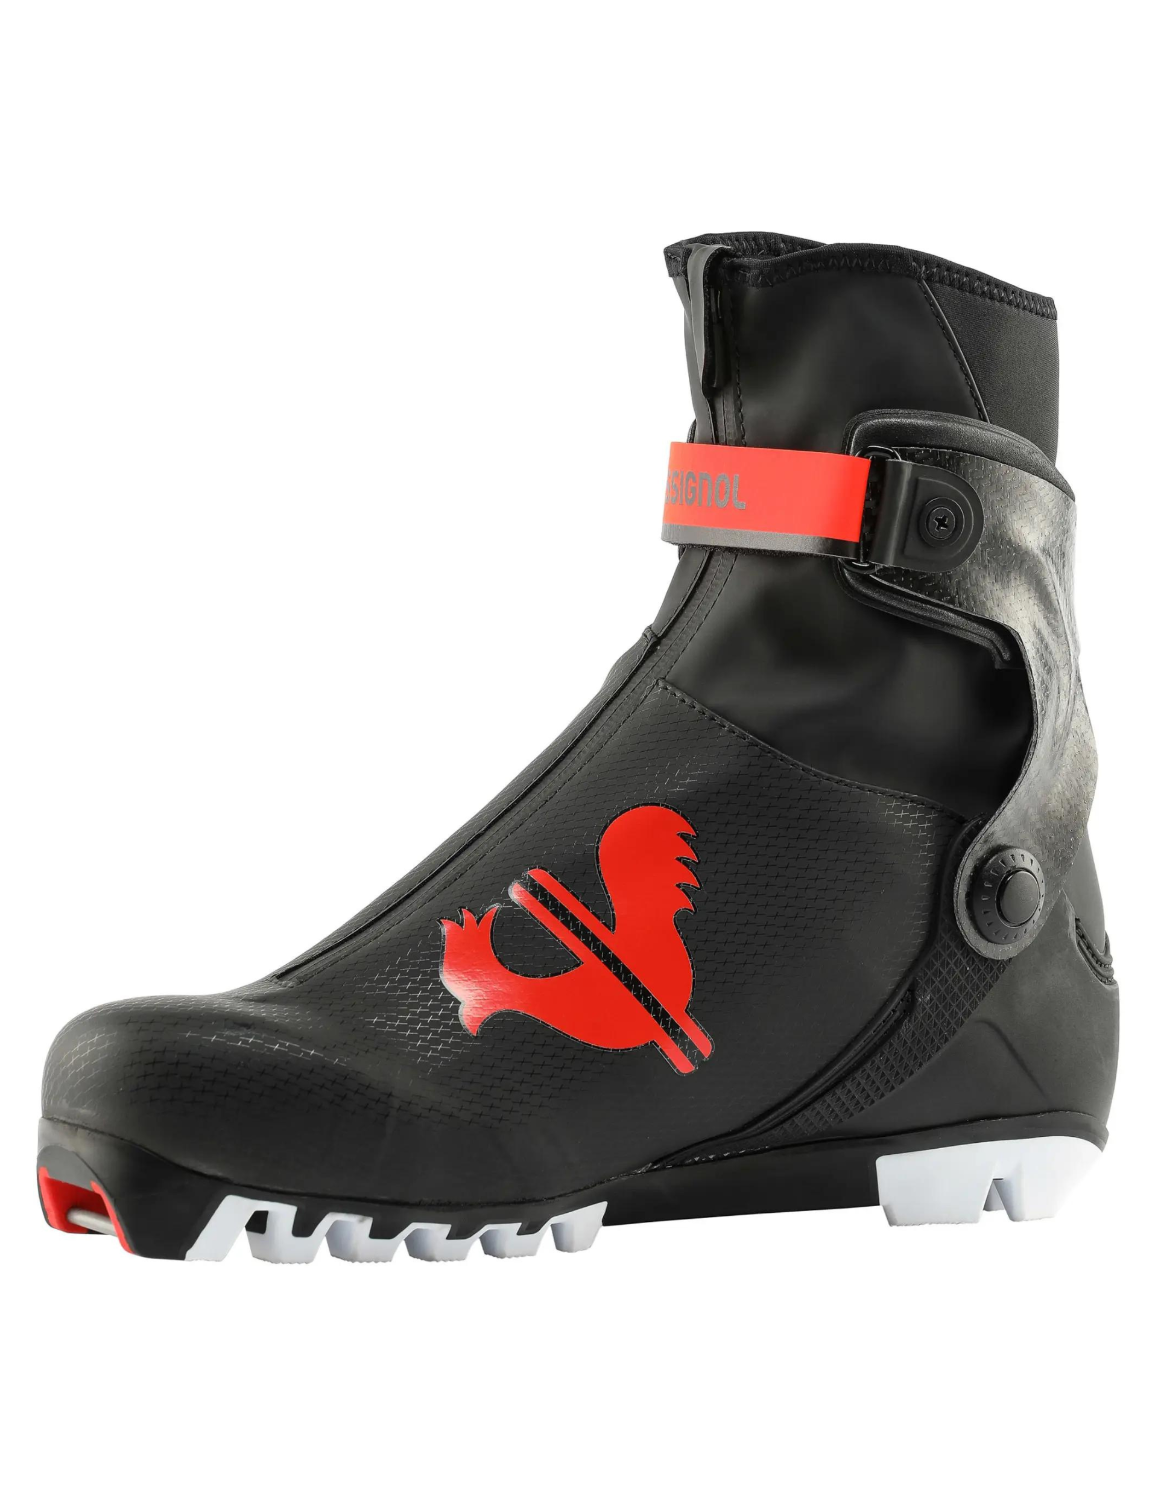 Chaussures de Ski de Fond Skating Rossignol X-Ium Skate Unisexe